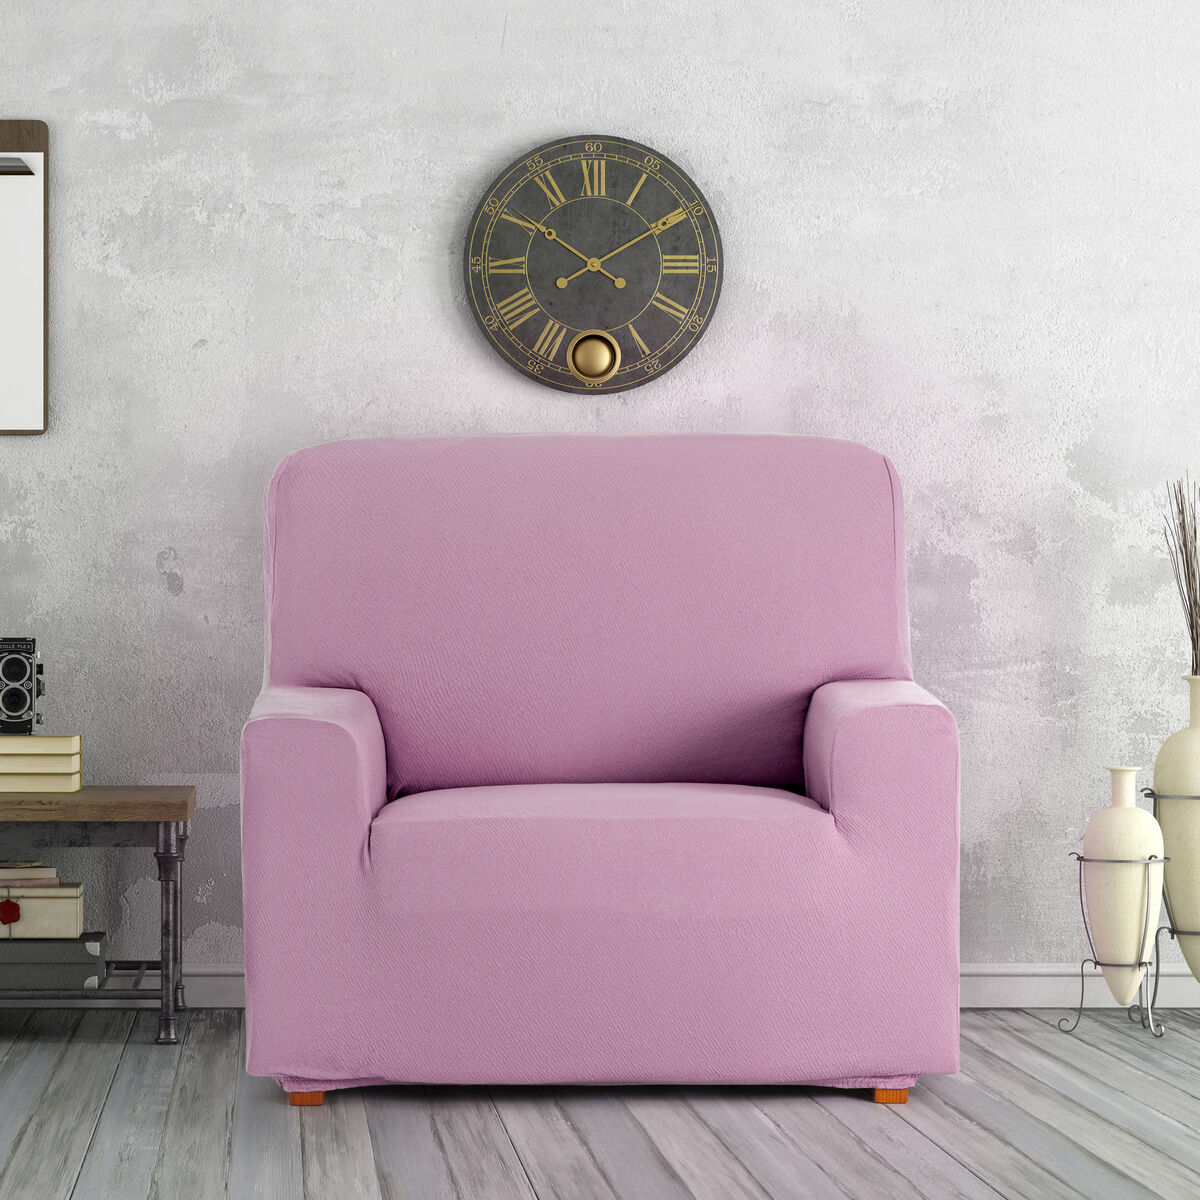 Armchair slipcovers Eysa BRONX Pink 70 x 110 x 110 cm